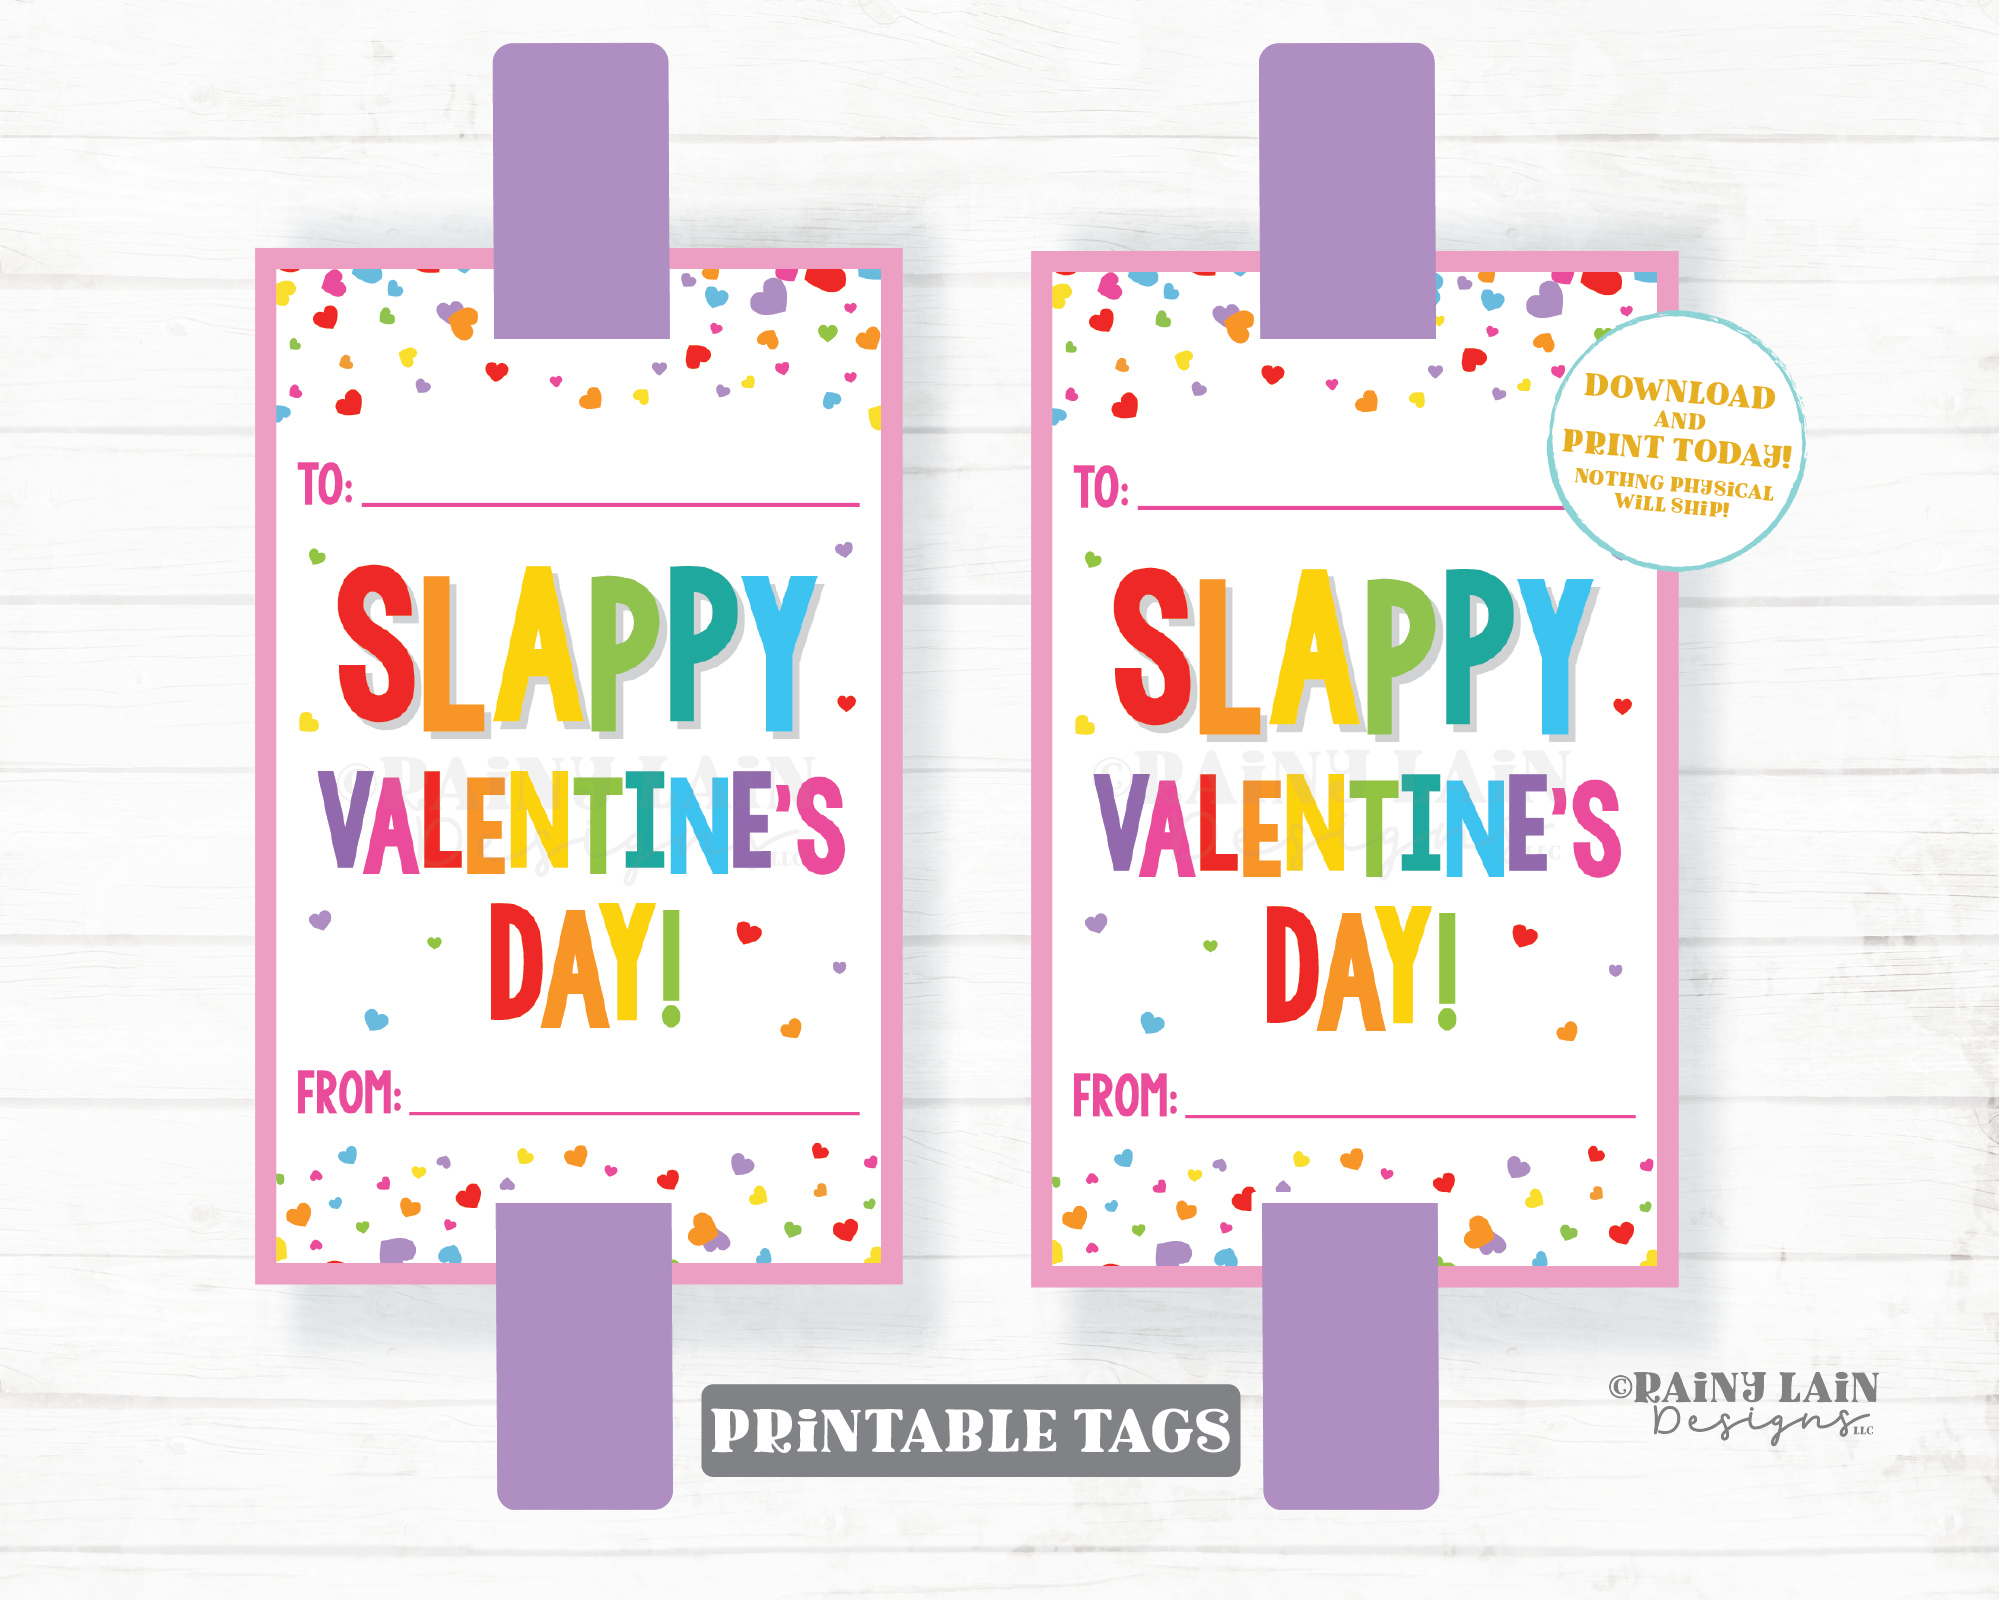 Slappy Valentine's Day Tag with TO Line Slap Bracelet Valentine Slappy Preschool Classroom Printable Kids Non-Candy From Teacher to Student